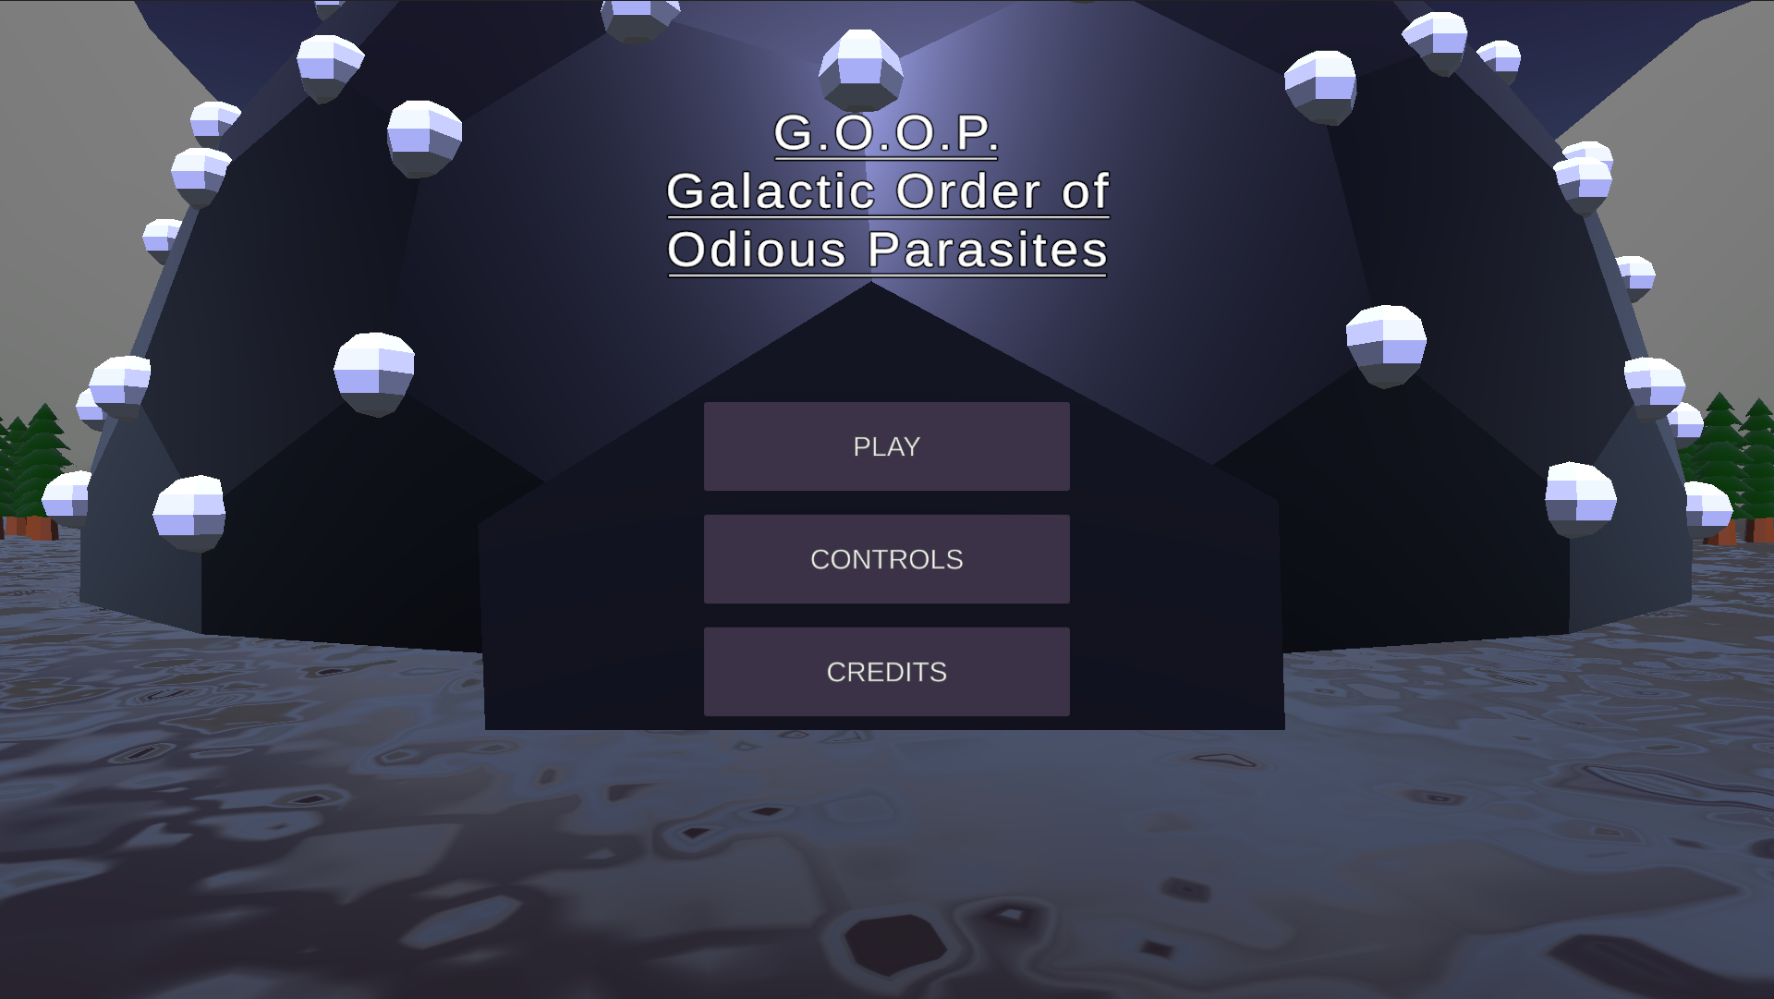 G.O.O.P - Galactic Order of Odious Parasites